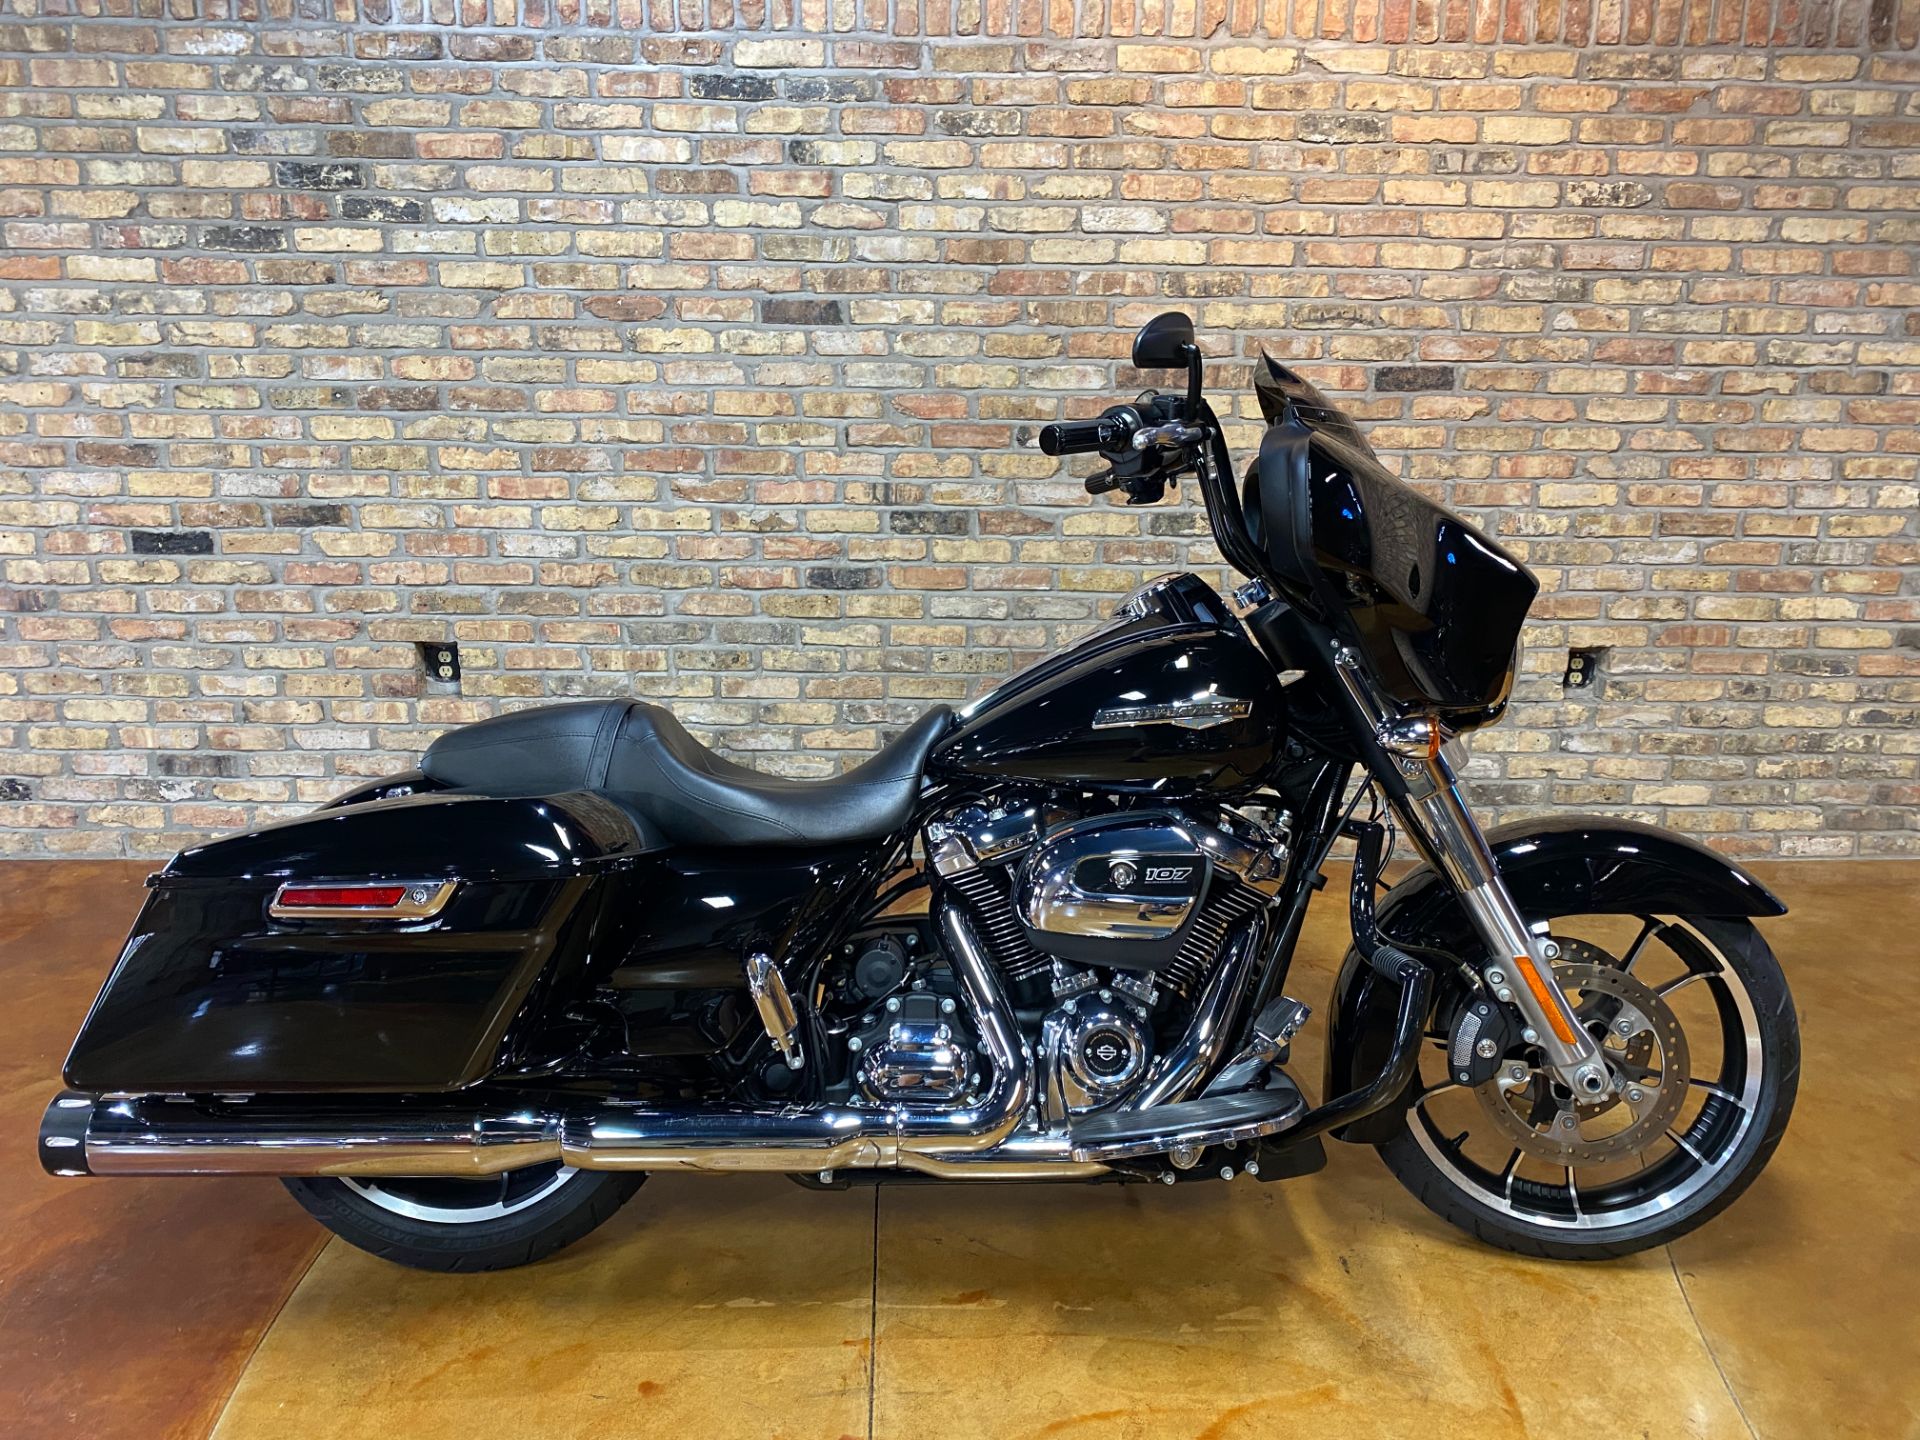 2021 Harley-Davidson Street Glide® in Big Bend, Wisconsin - Photo 23